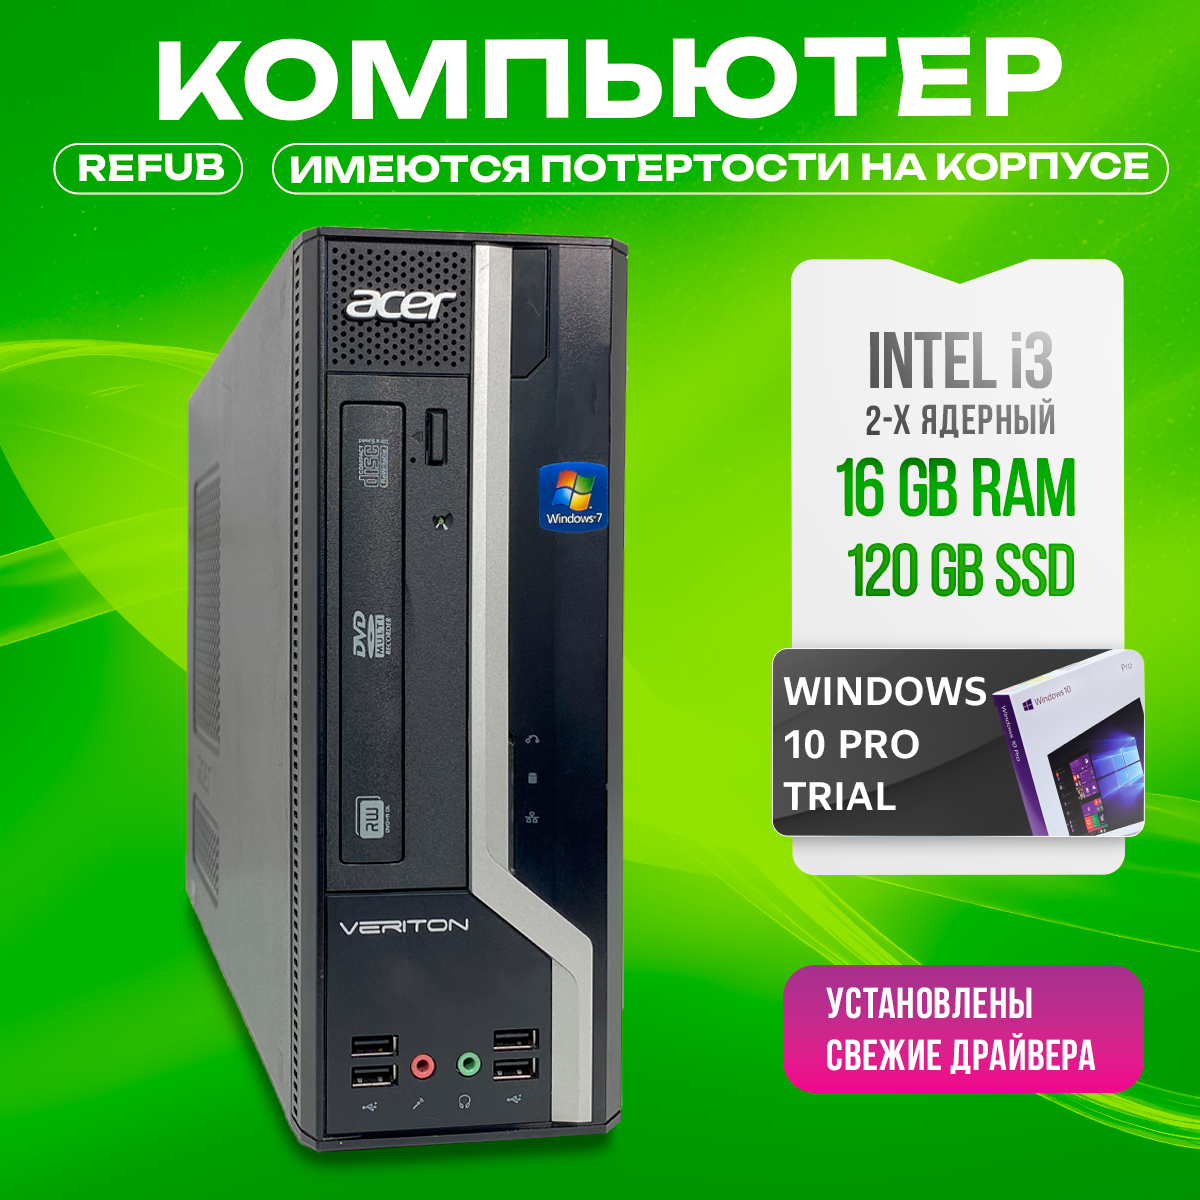 Системный блок Acer Veriton X-series i3-2100/DDR3 16GB/SSD 120GB/ Windows 10 pro trial